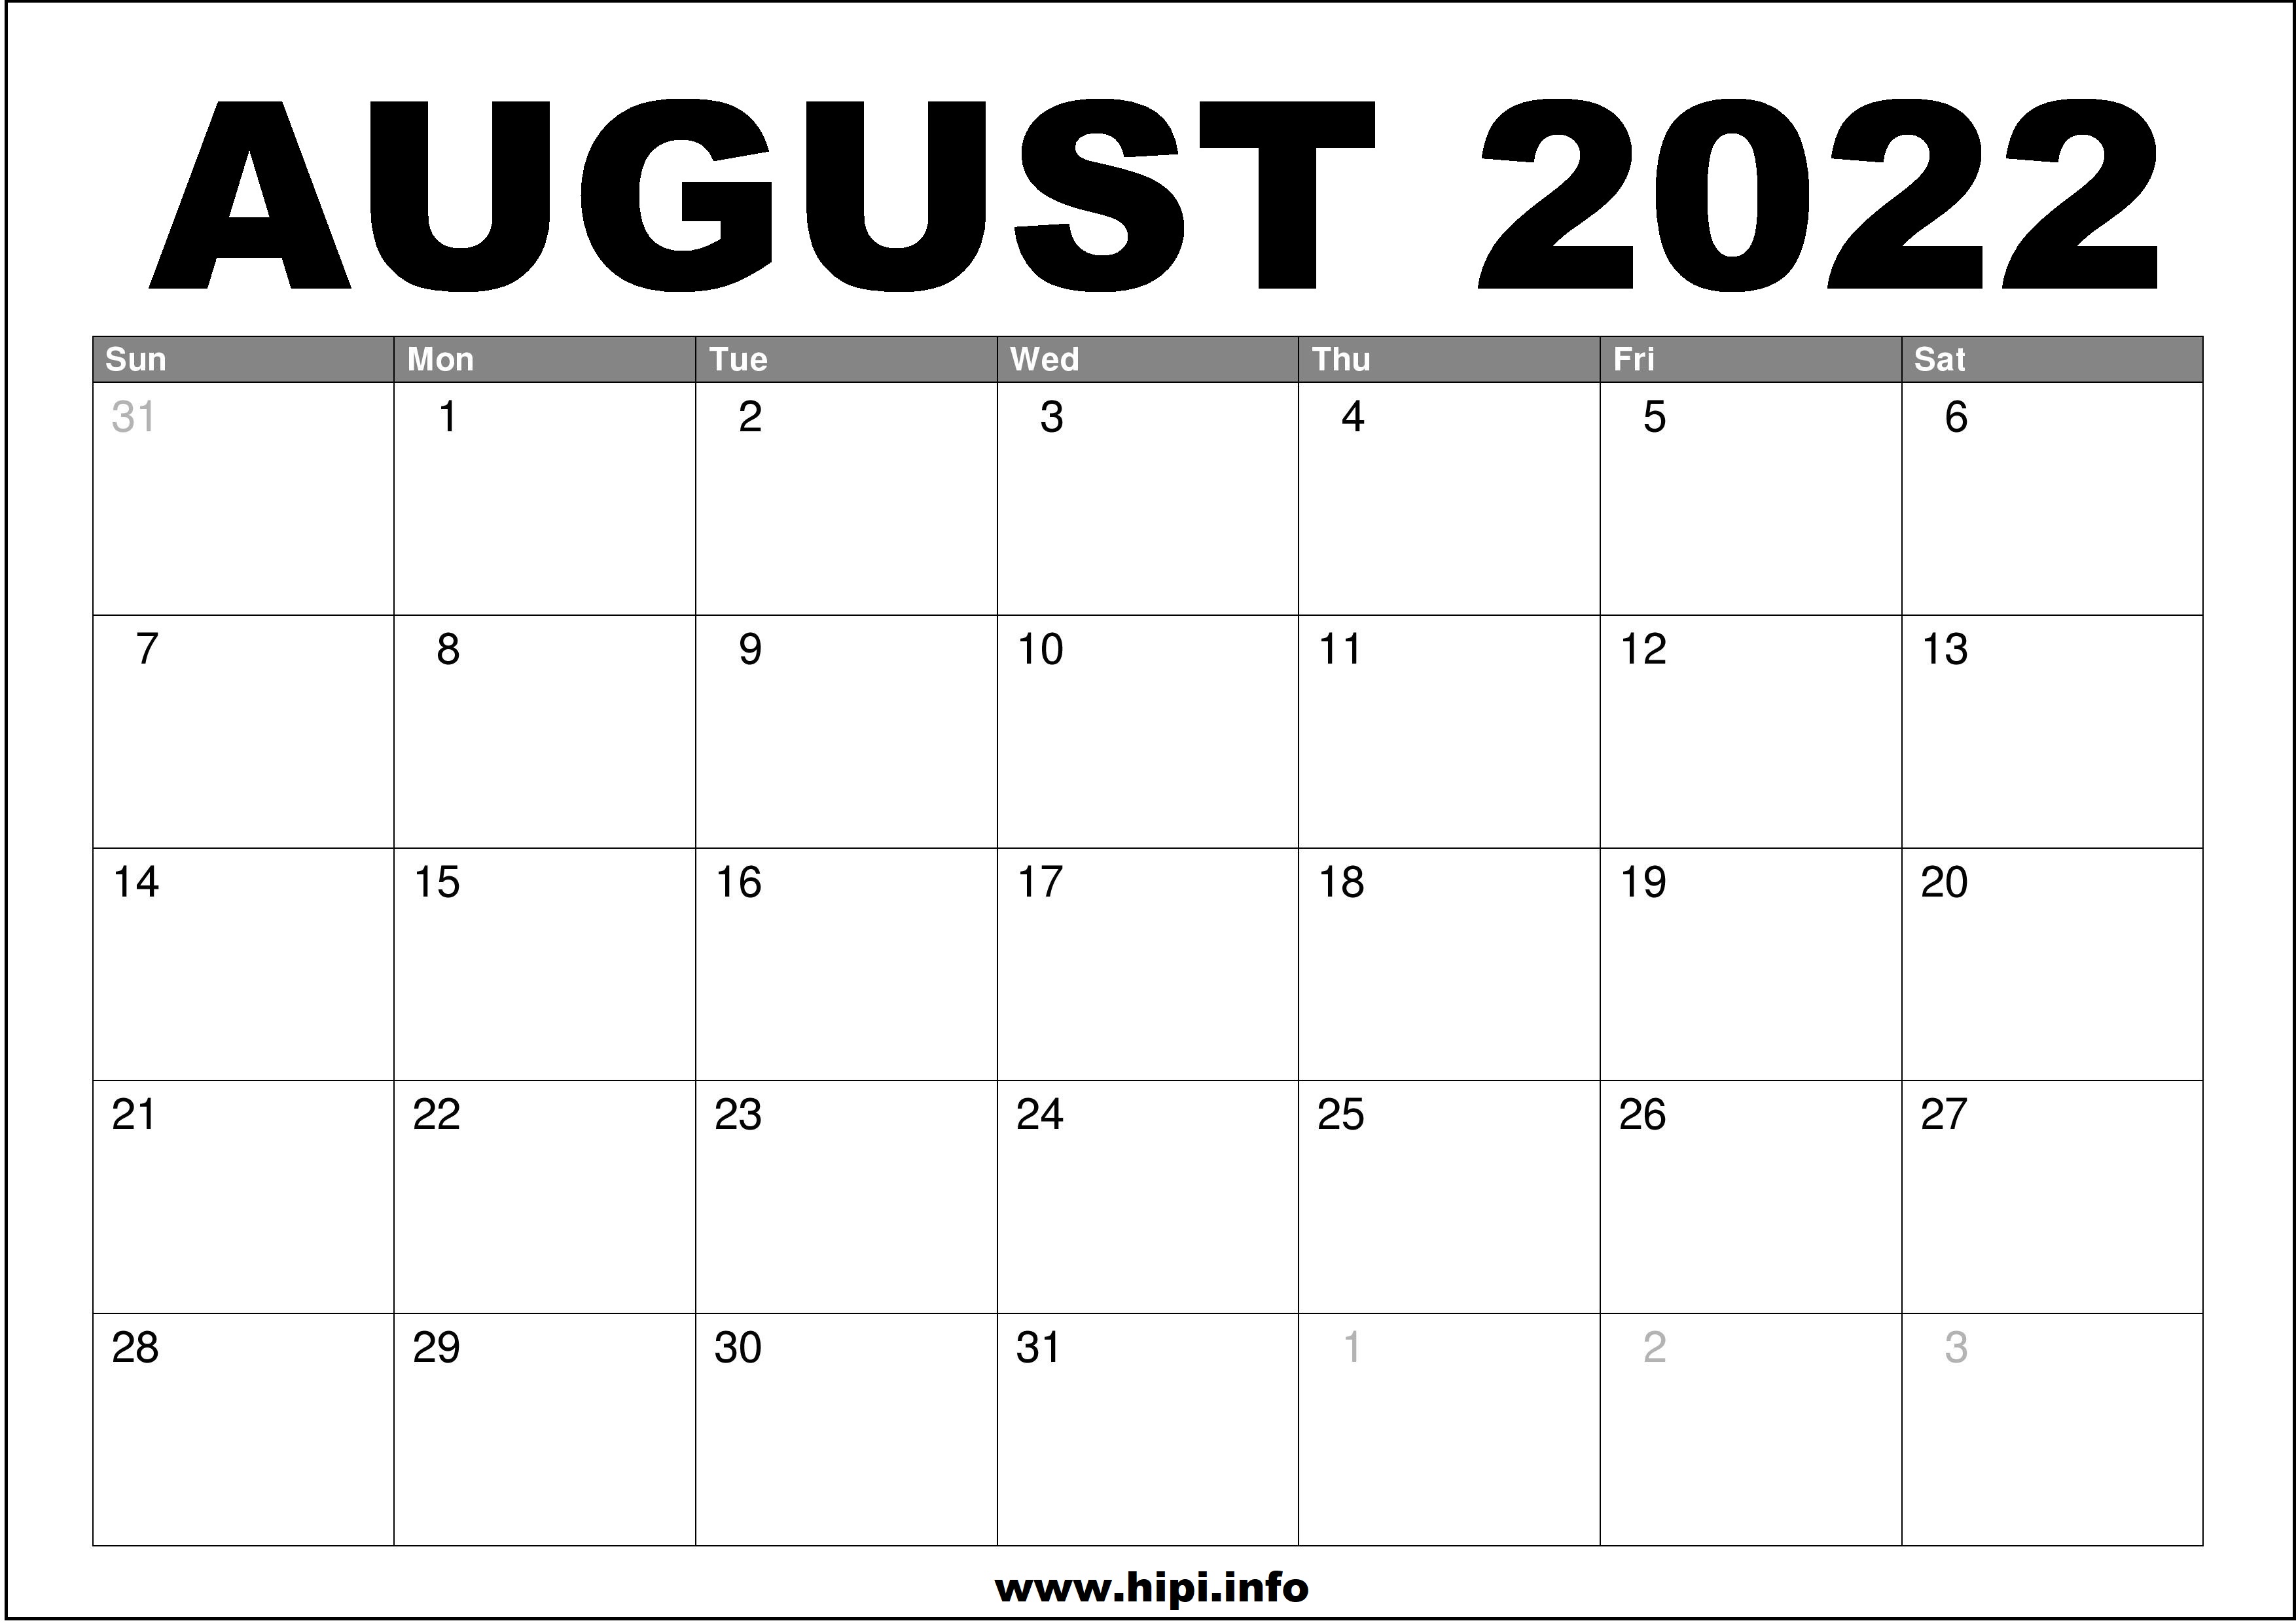 Free Calendar August 2022 August 2022 Calendar Printable Free - Hipi.info | Calendars Printable Free